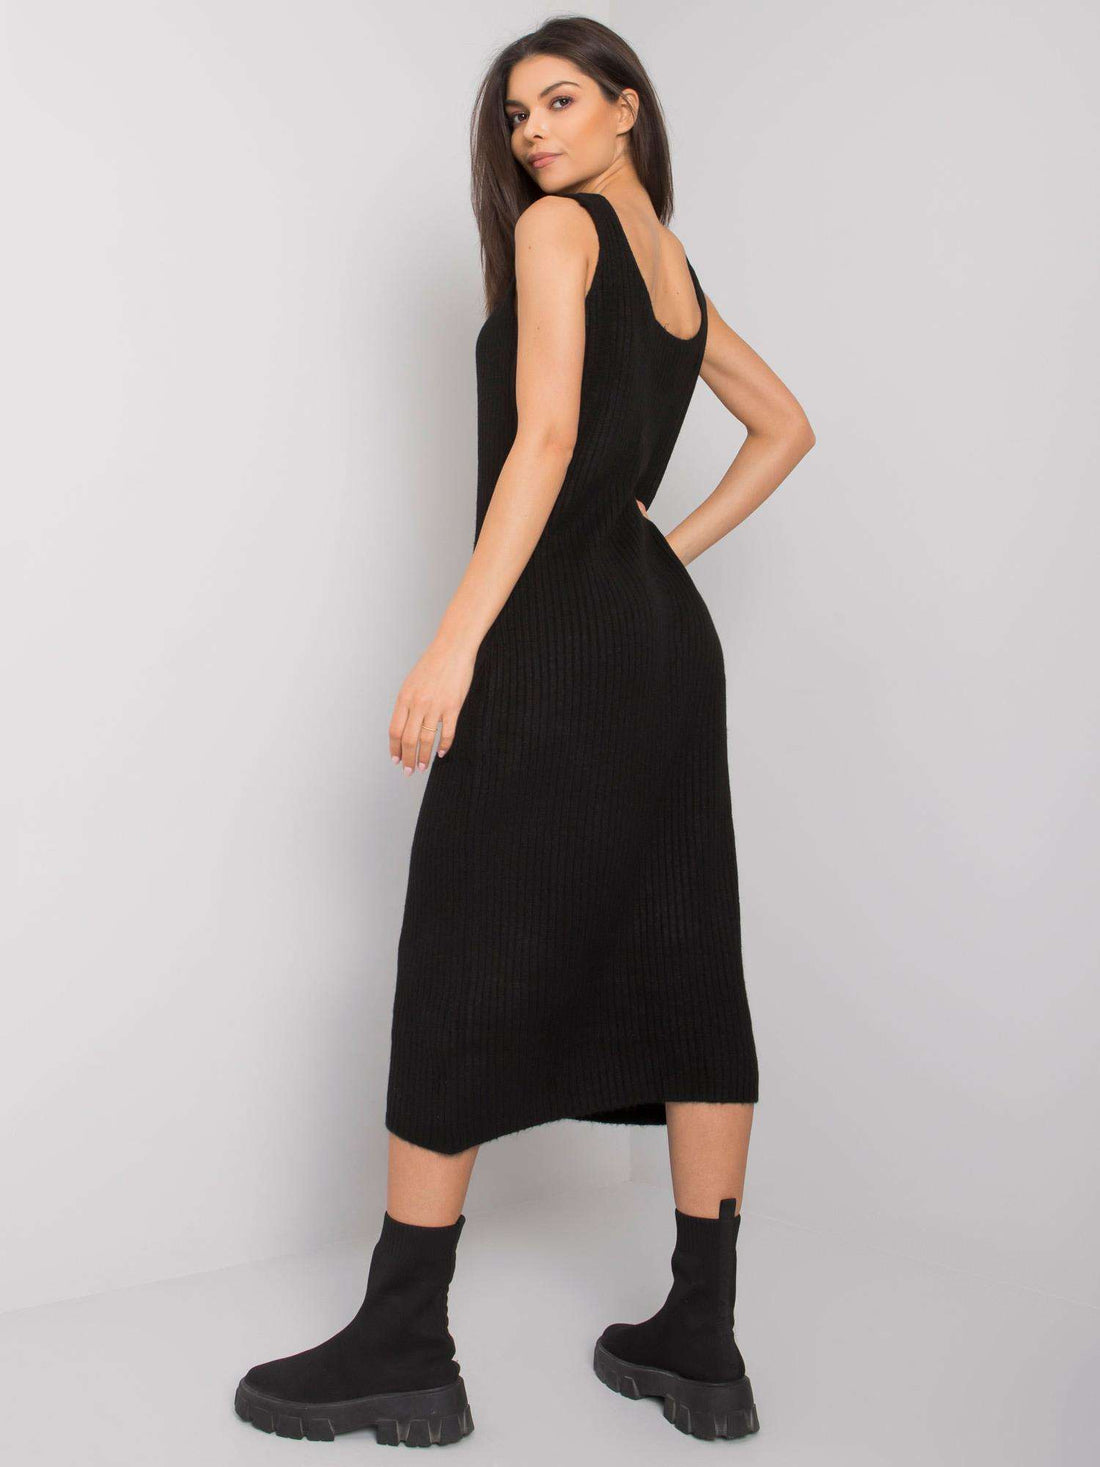 2-piece Matching Set Knitted Dress Black